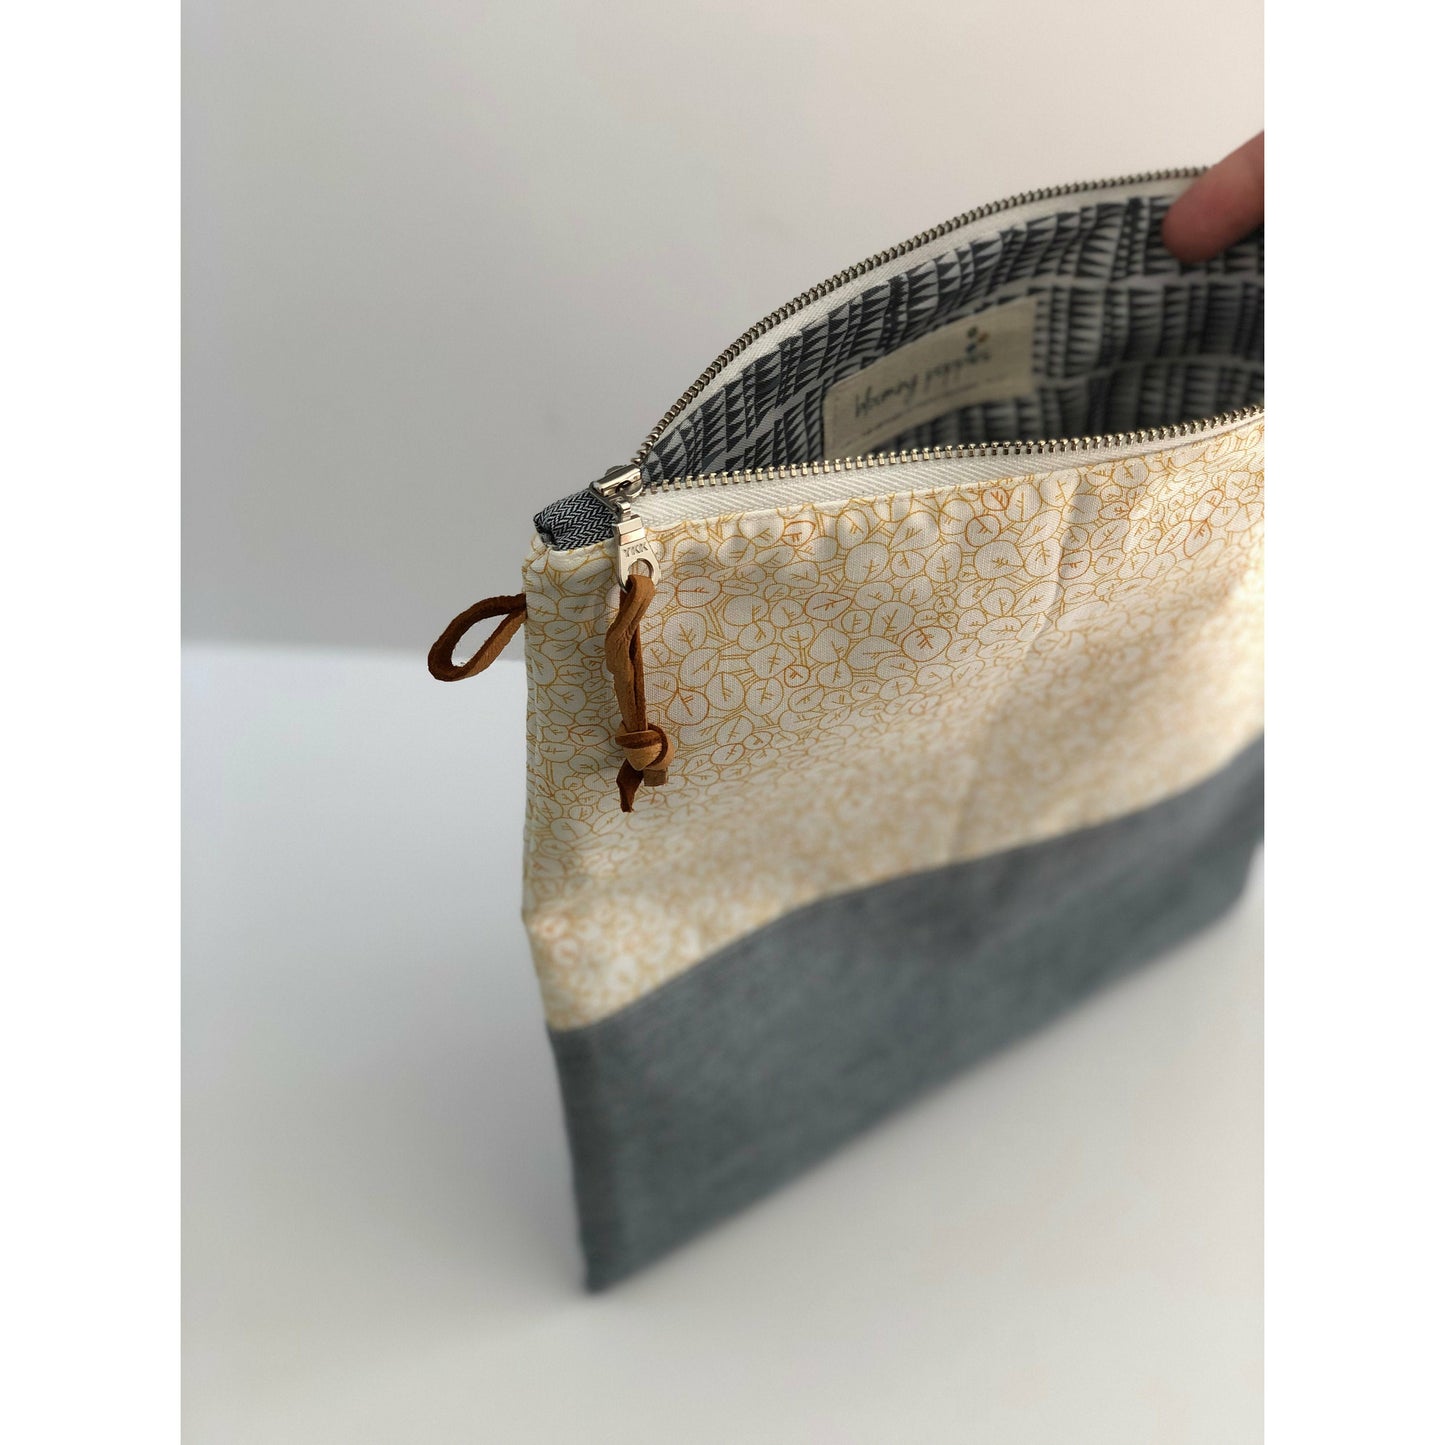 Handmade Modern Foldover Clutch Purse- The Amelia, with Leather Trim and Designer Fabrics